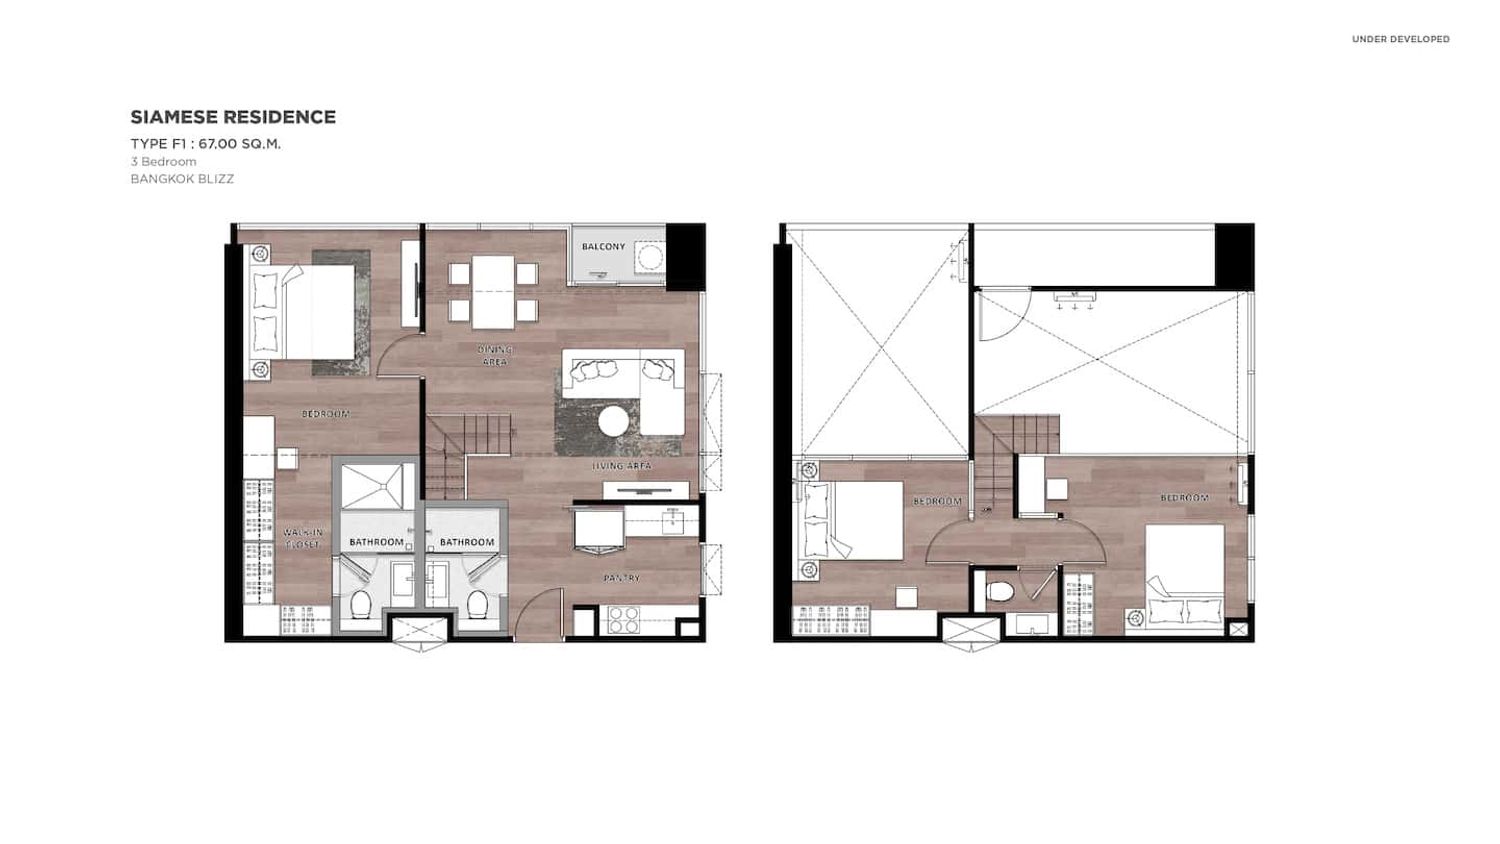 3 Bedroom Siamese Residence ในโครงการ แลนด์มาร์ค แอทเอ็มอาร์ทีเอ, ภาพที่ 4